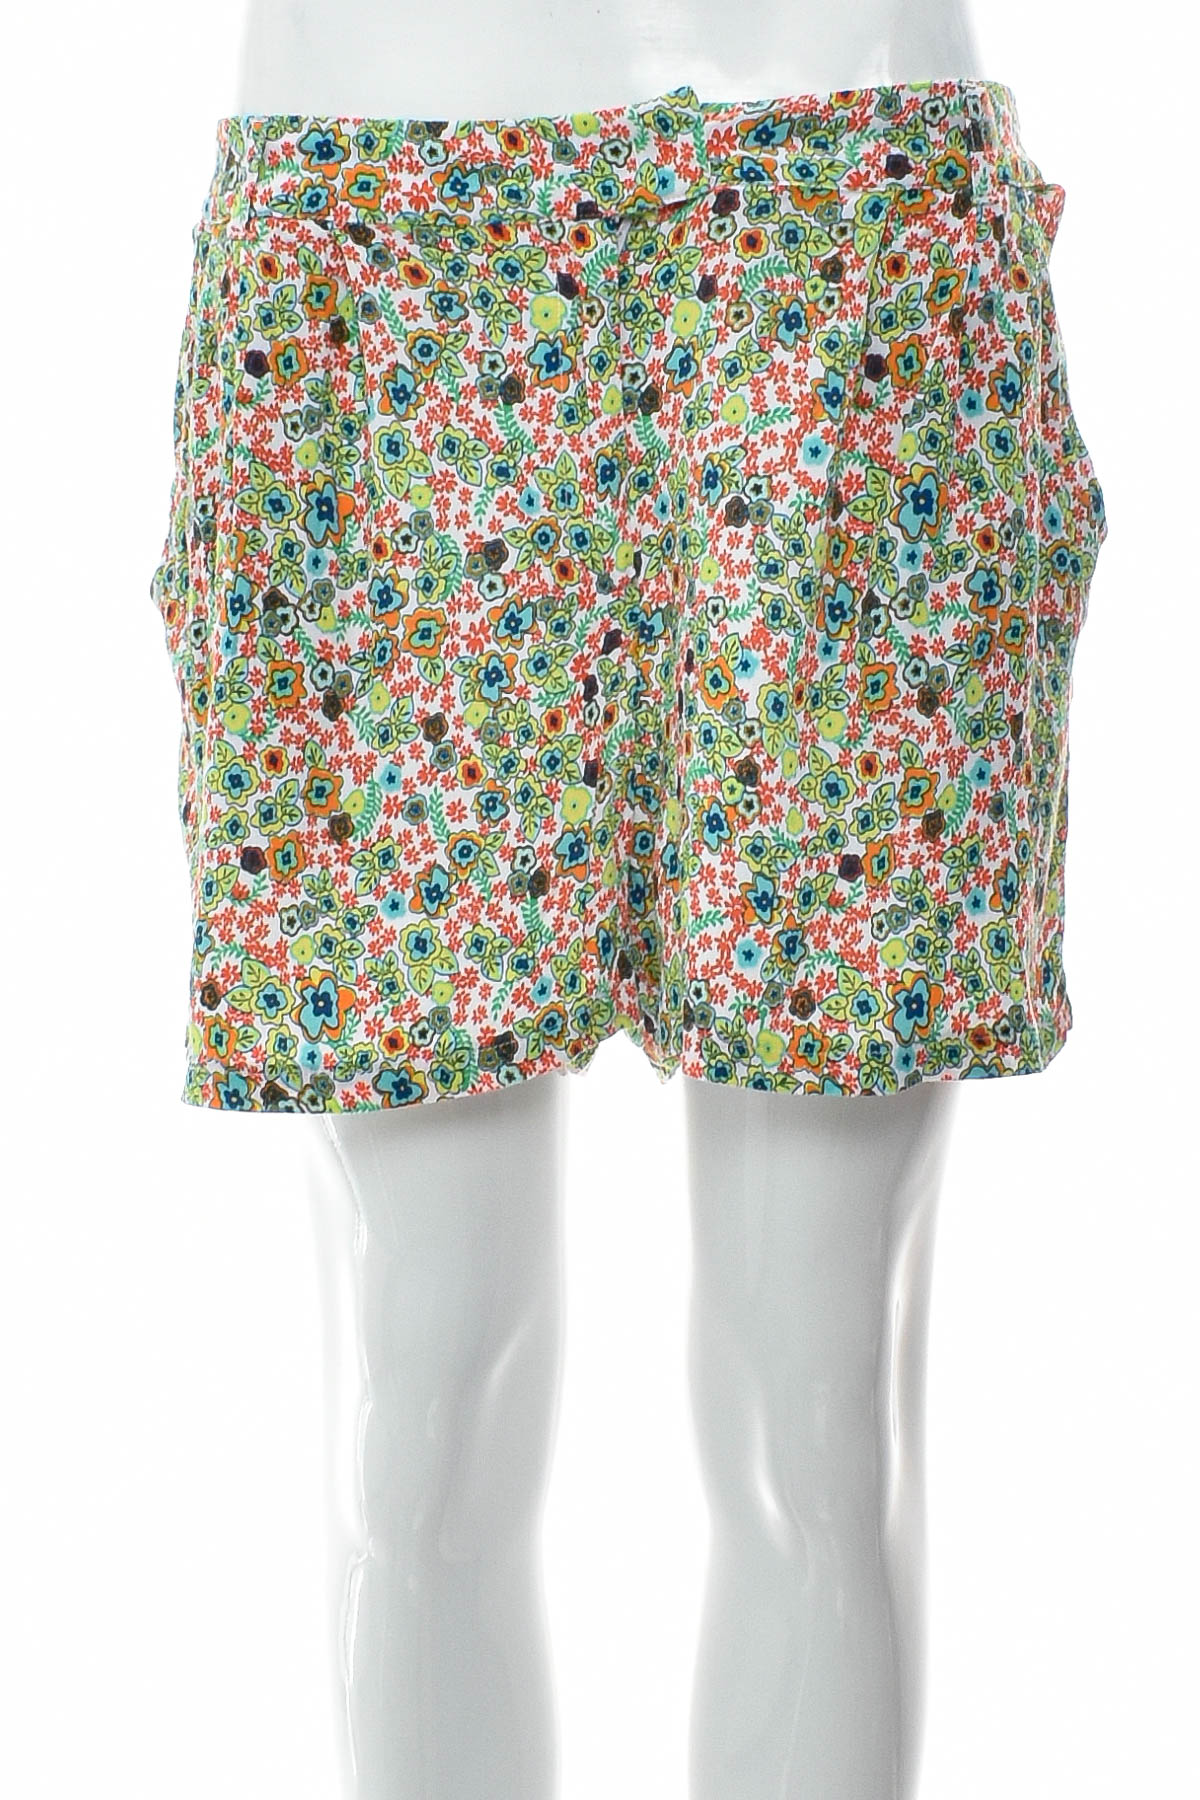 Female shorts - United Colors of Benetton - 0